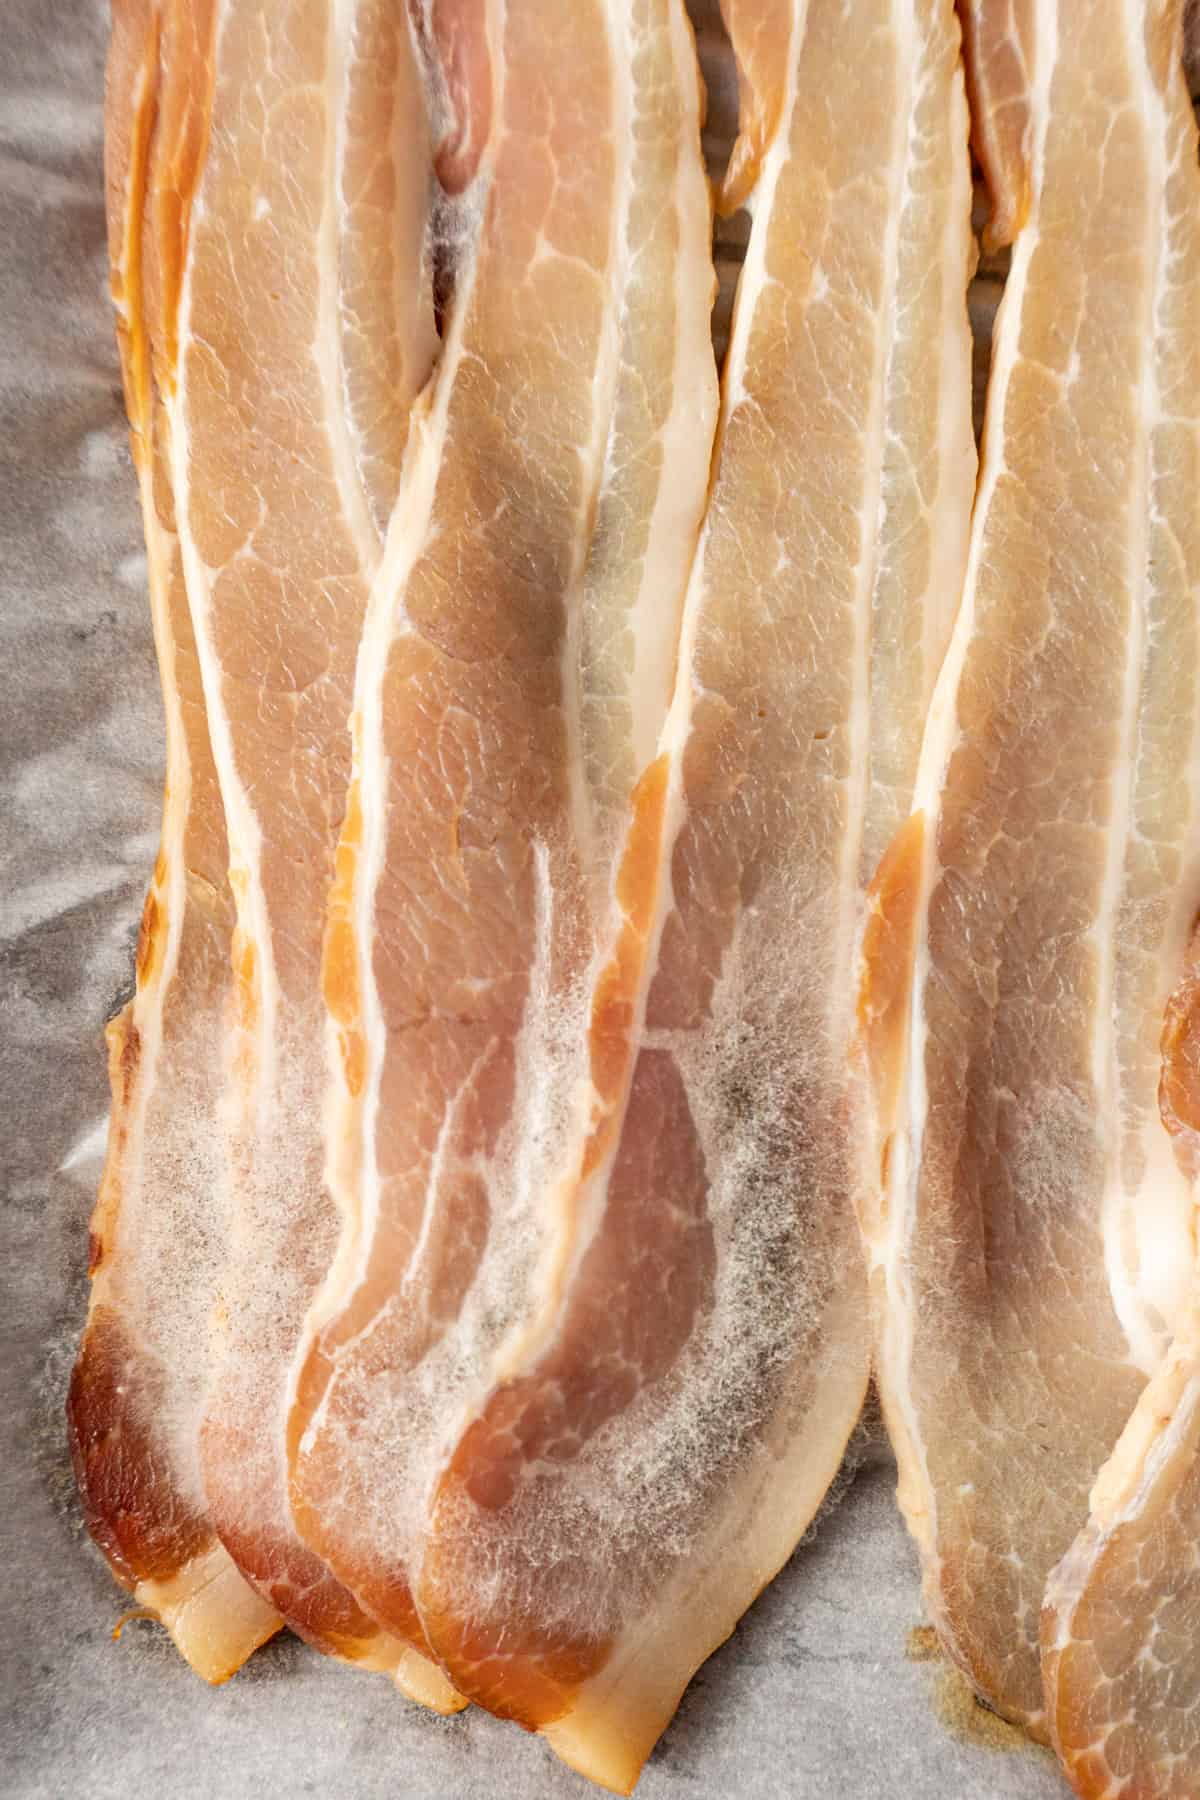 moldy discolored bacon strips